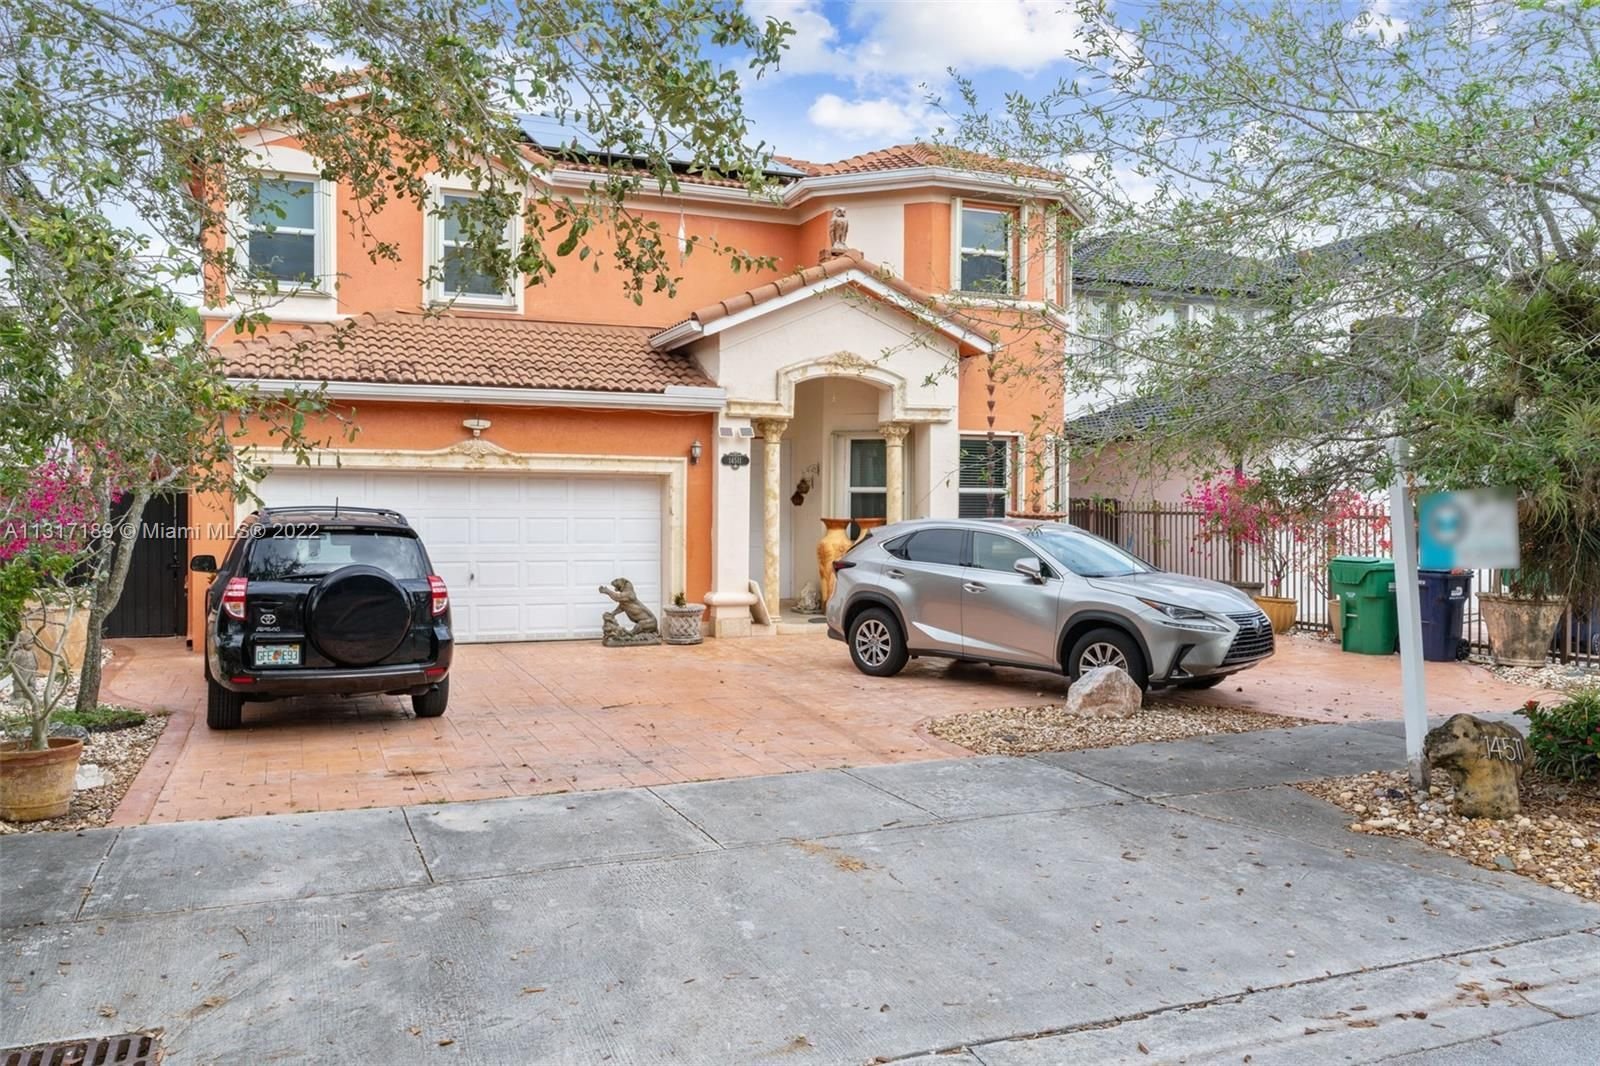 Real estate property located at 14511 10th St, Miami-Dade County, Miami, FL